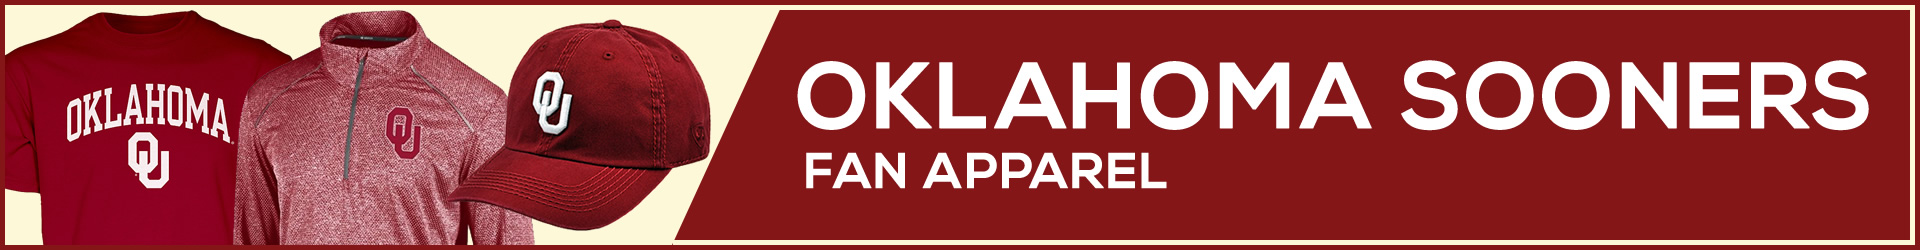 Oklahoma Sooners Apparel